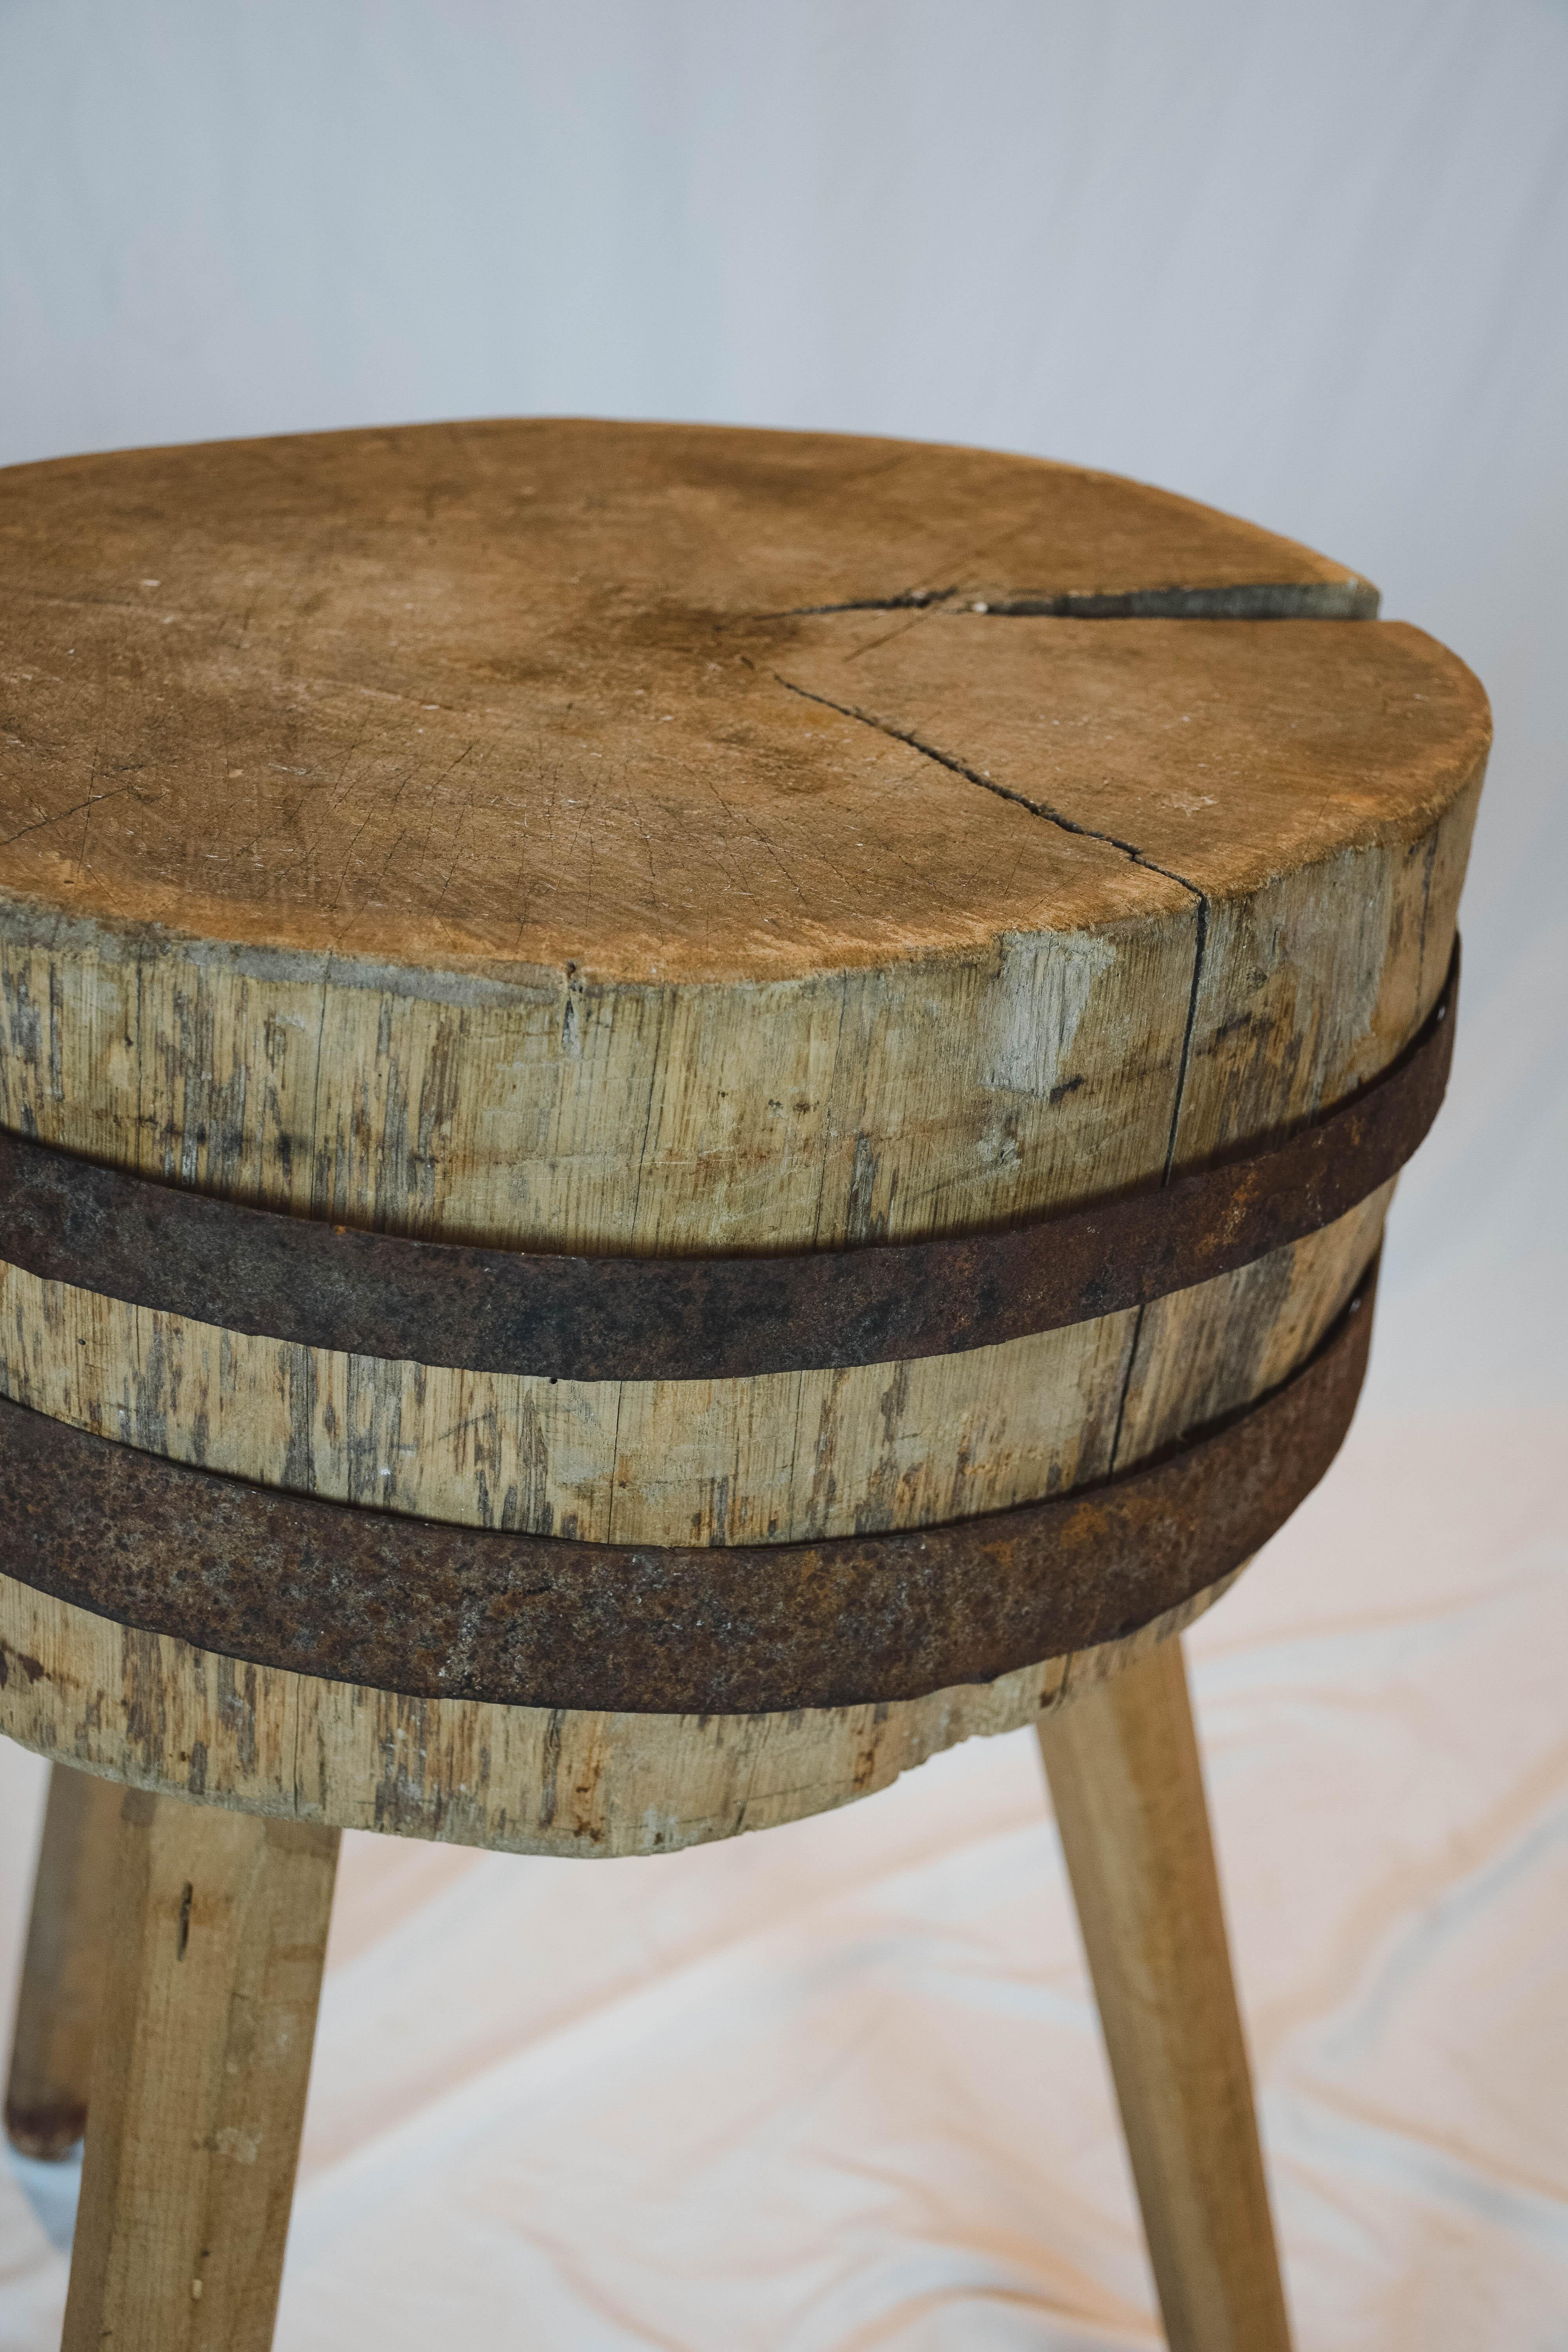 Iron Simple Wooden Block Table